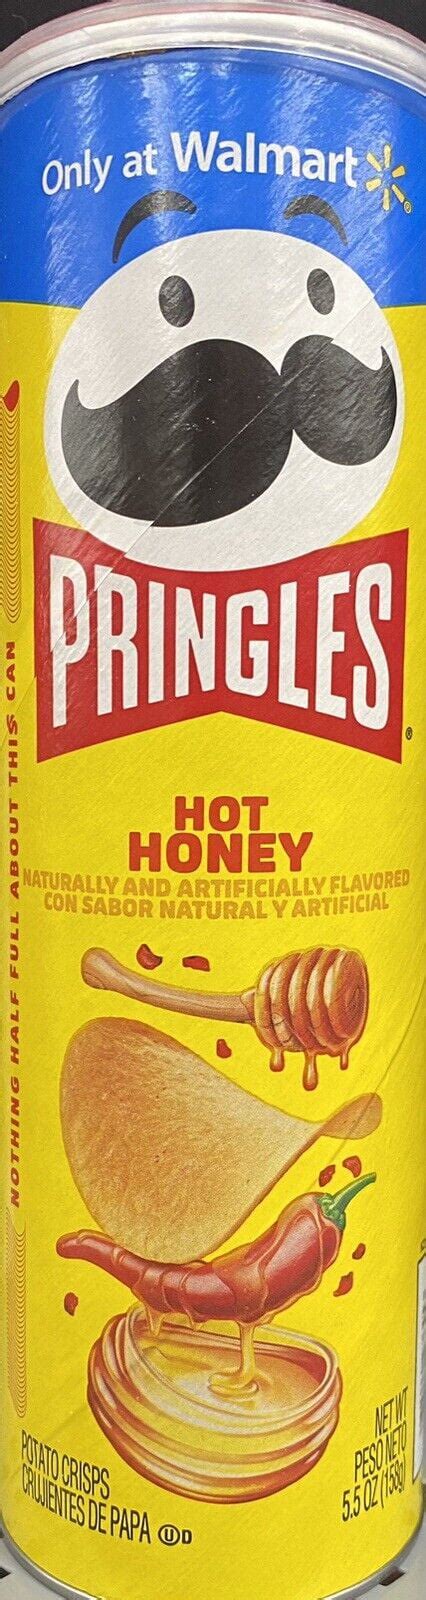 Pringles Hot Honey Flavored Potato Chips Snack Crisps Limited Edition 5